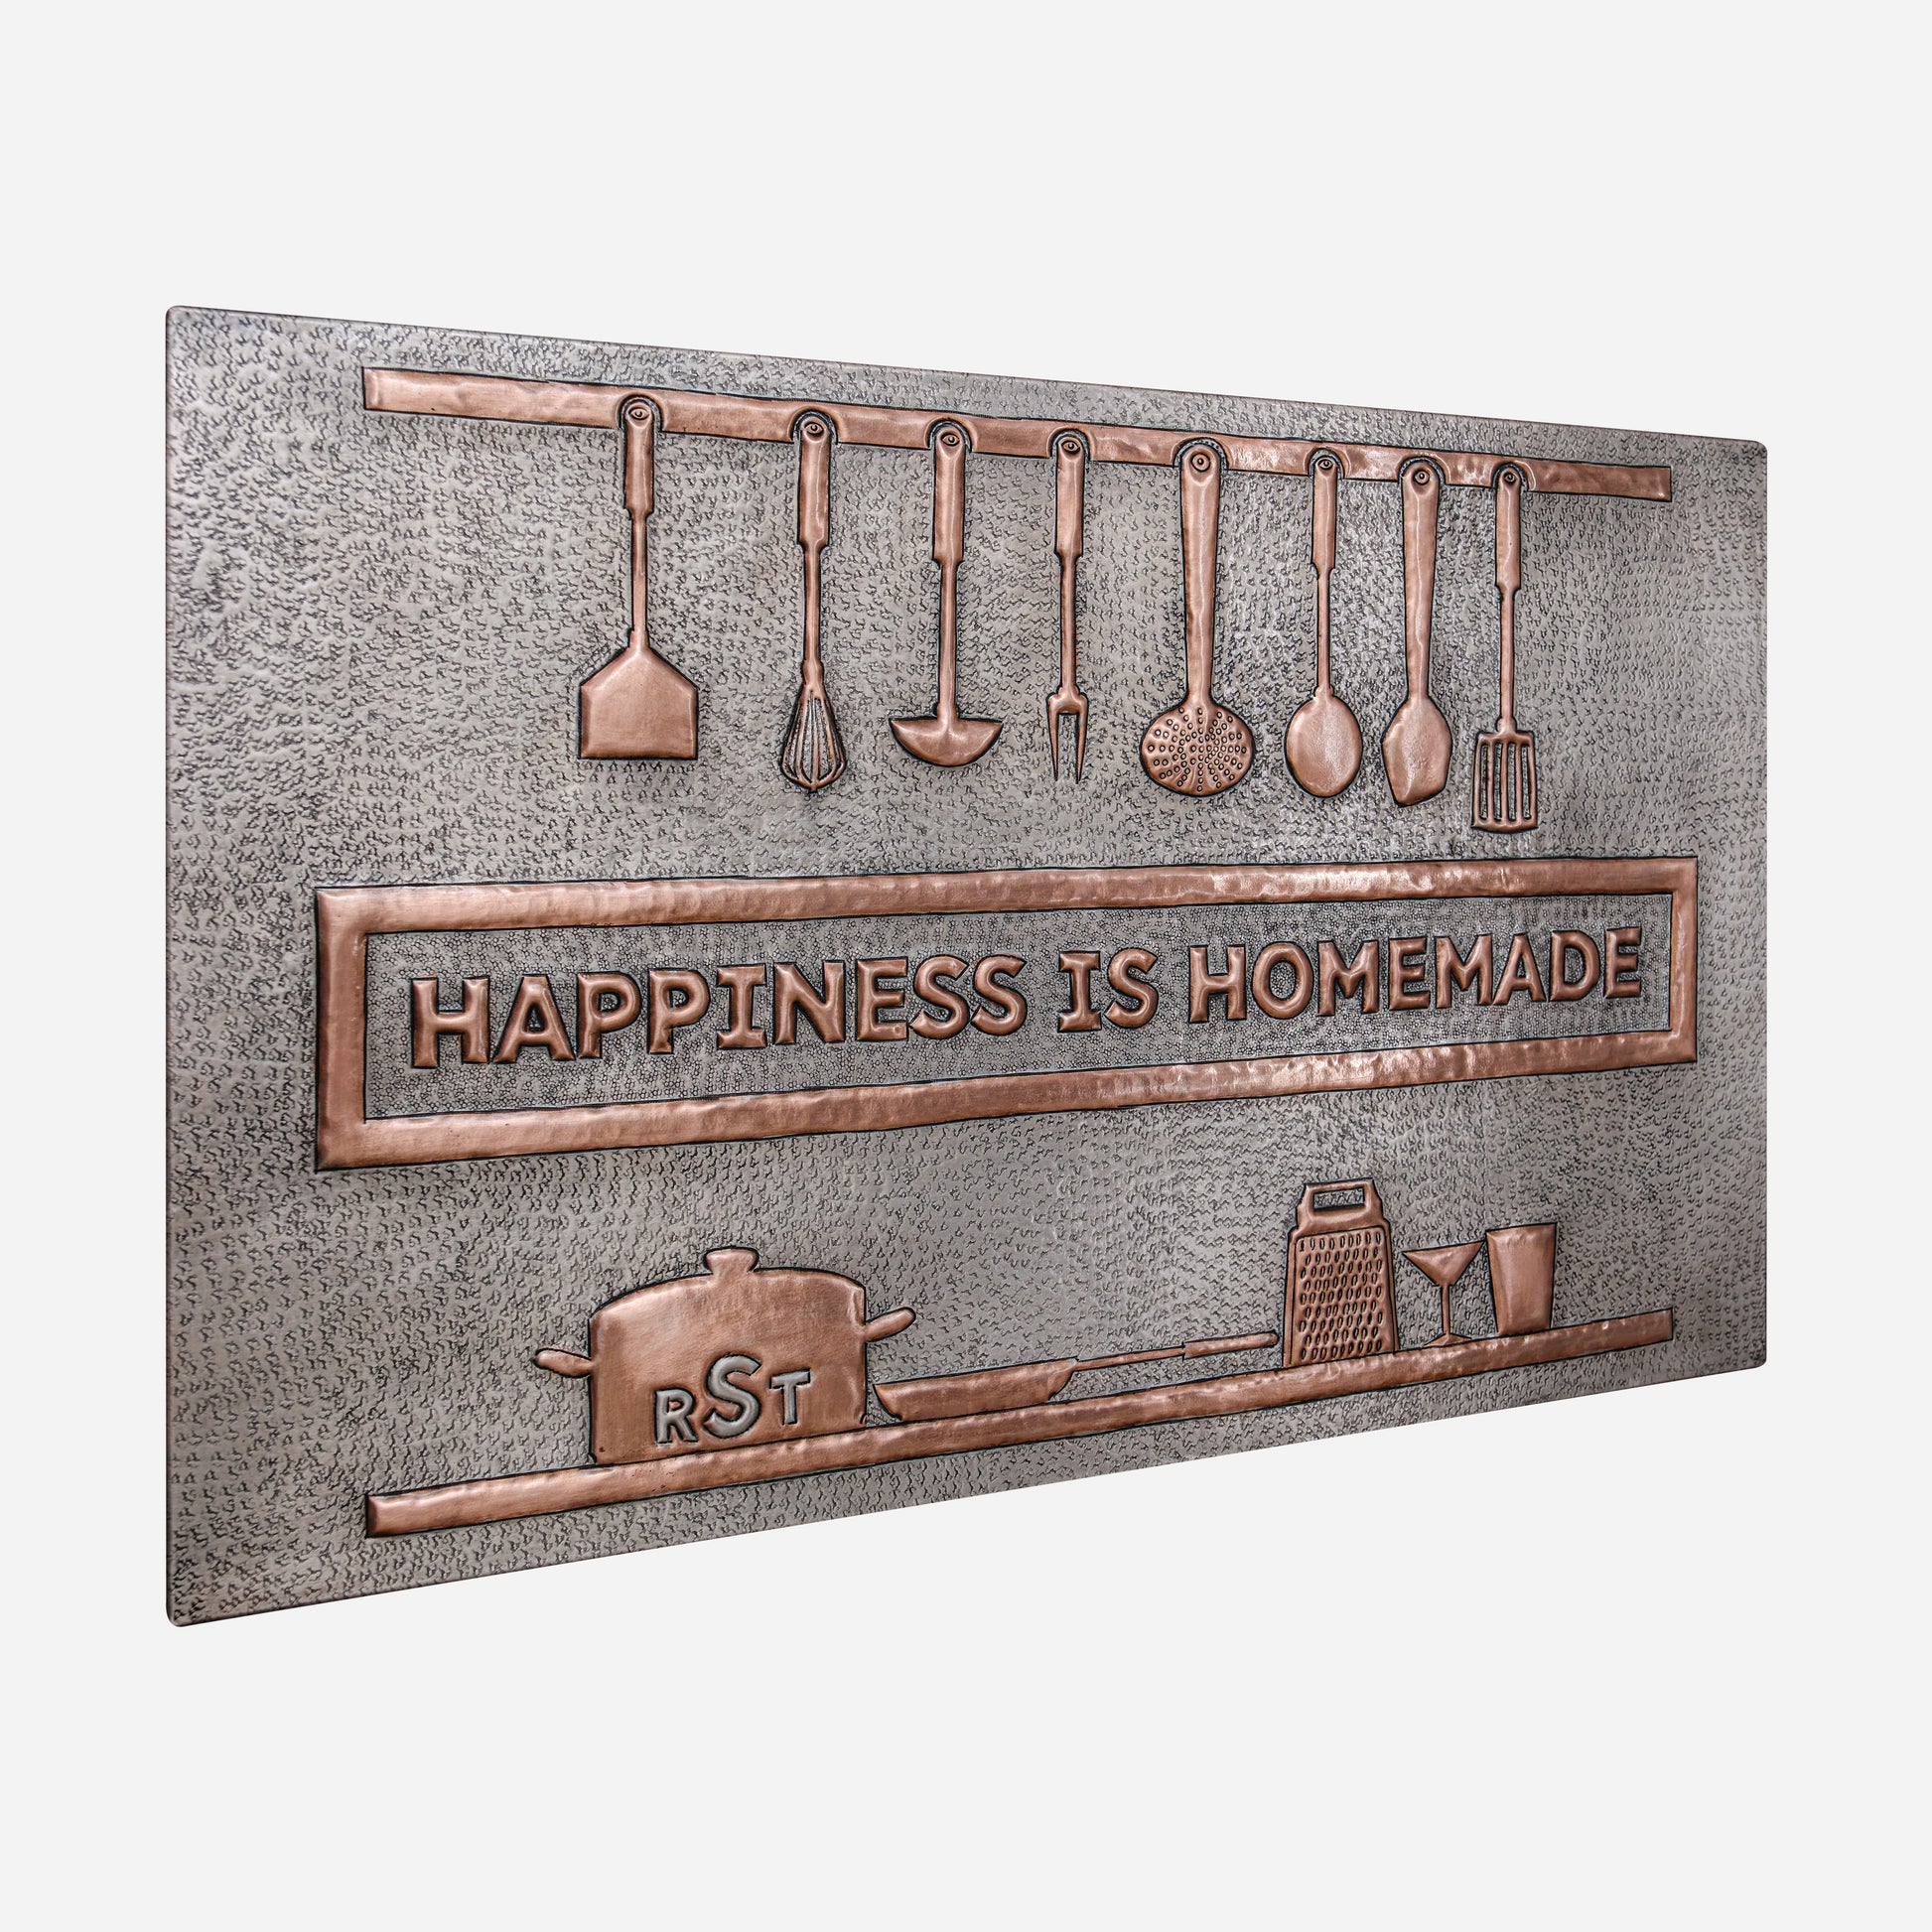 Personalized Copper Backsplash (Kitchen Utensils and Custom Text, Silver&Copper Color)